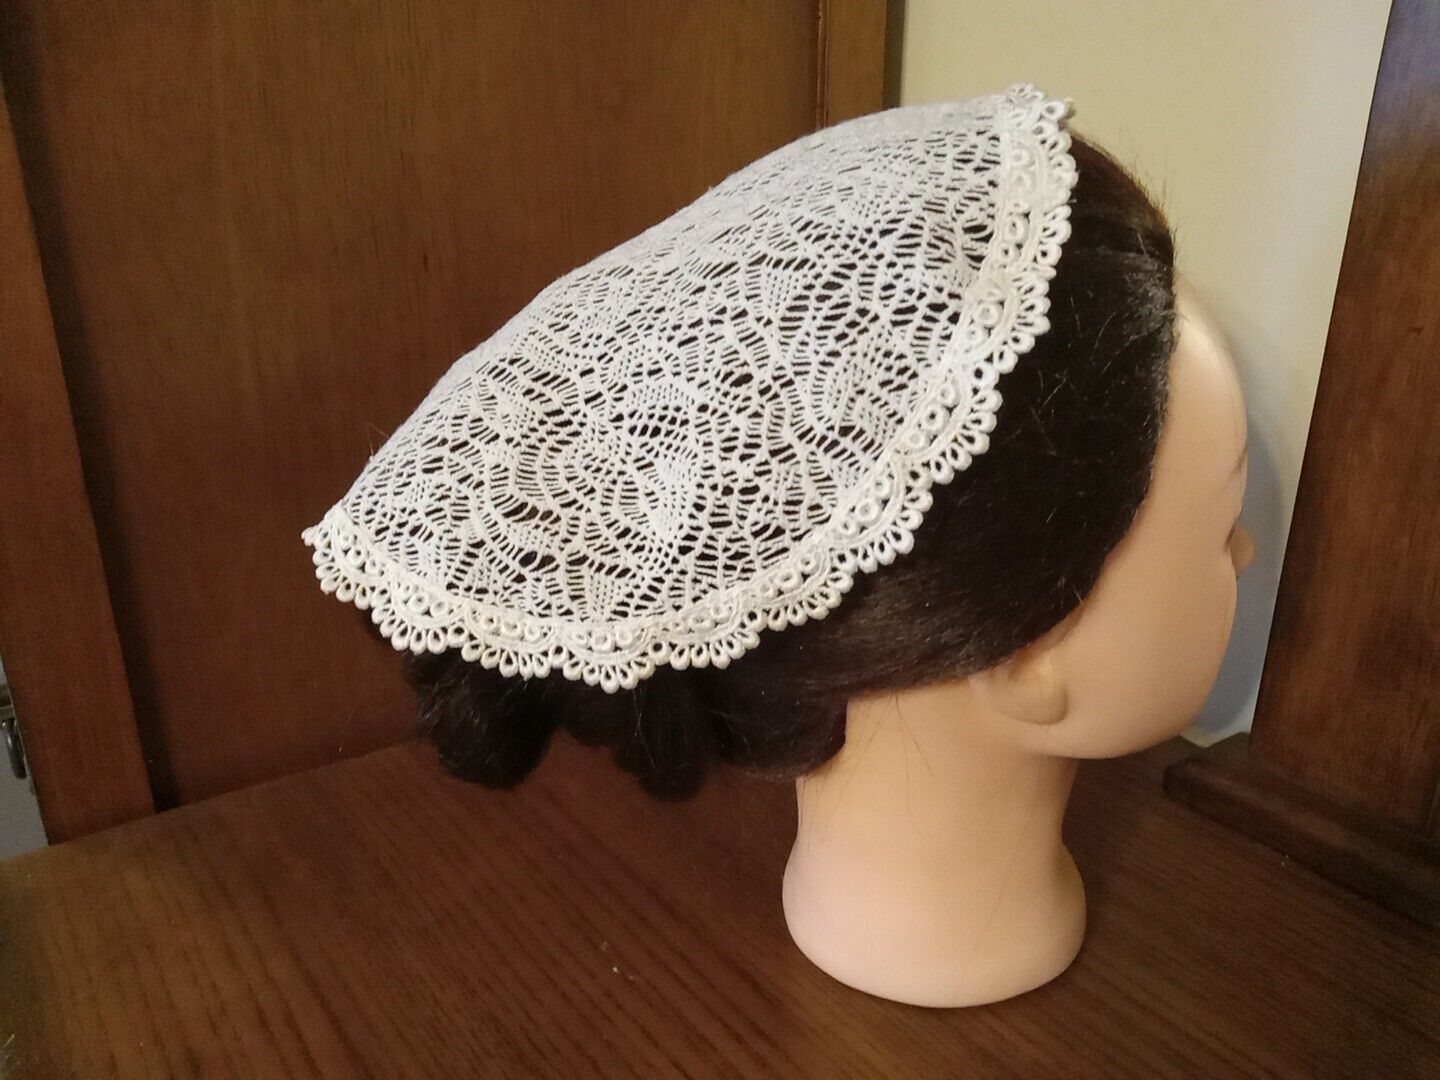 Amish Mennonite Catholic Christian White Chapel Veil Lace Headcovering White EUC